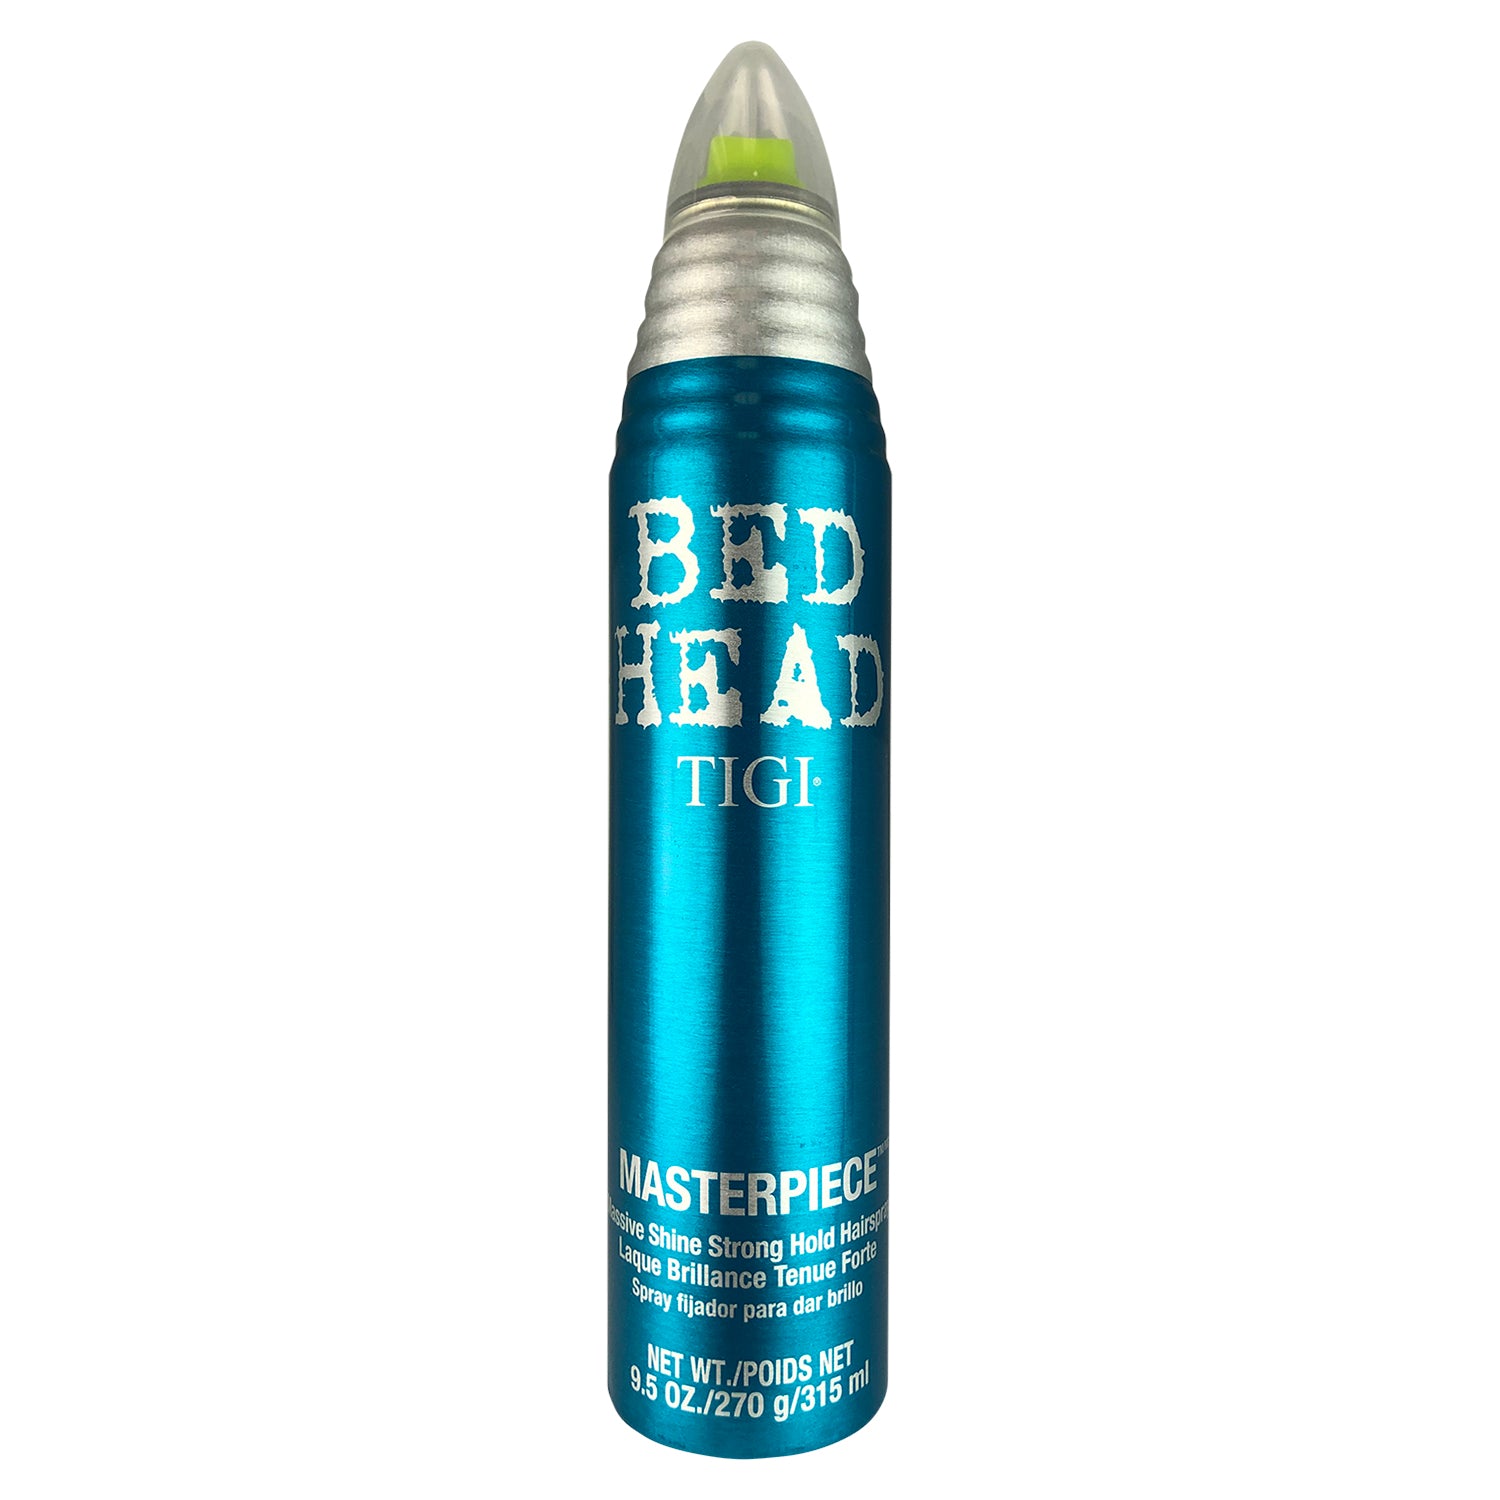 BED HEAD TIGI Masterpiece Massive Shine Strong Hold Hairspray 9.5 oz